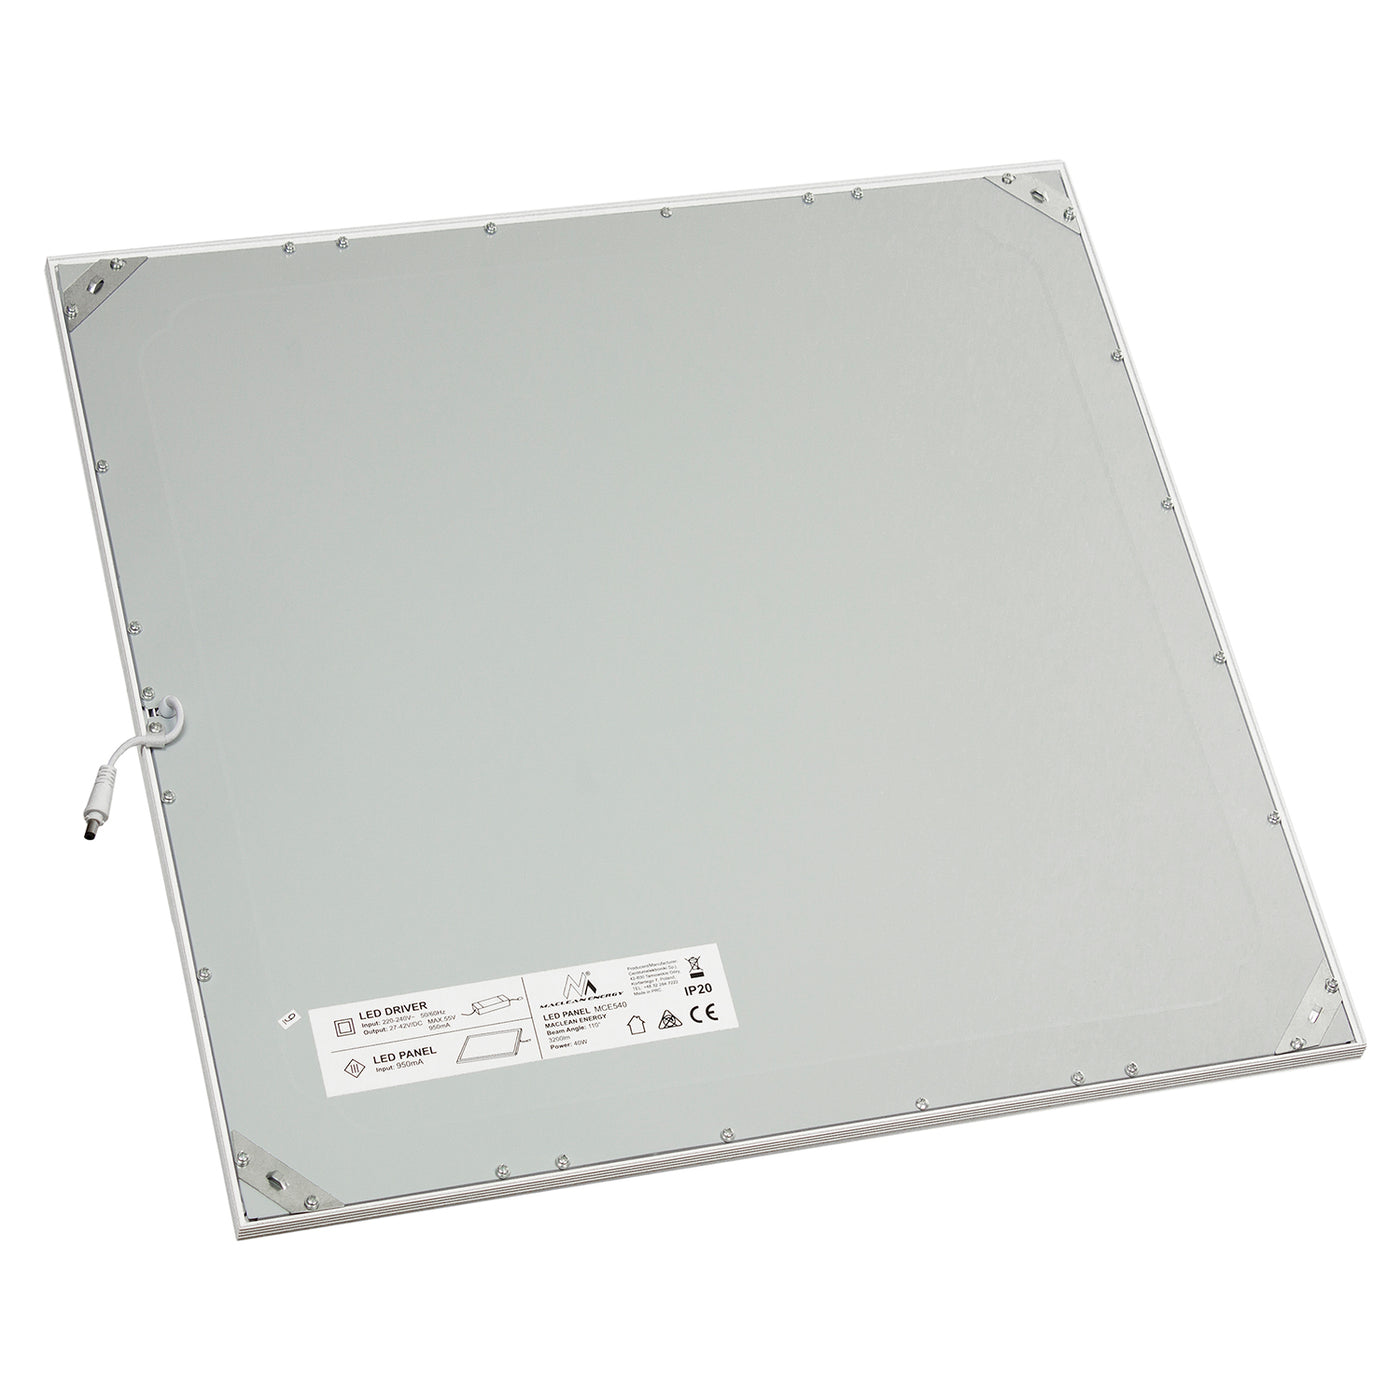 Panel LED sufitowy slim 40W, 3200lm Neutral White (4000K) Maclean Energy MCE540 NW 595x595x8mm raster, funkcja FLICKER-FREE